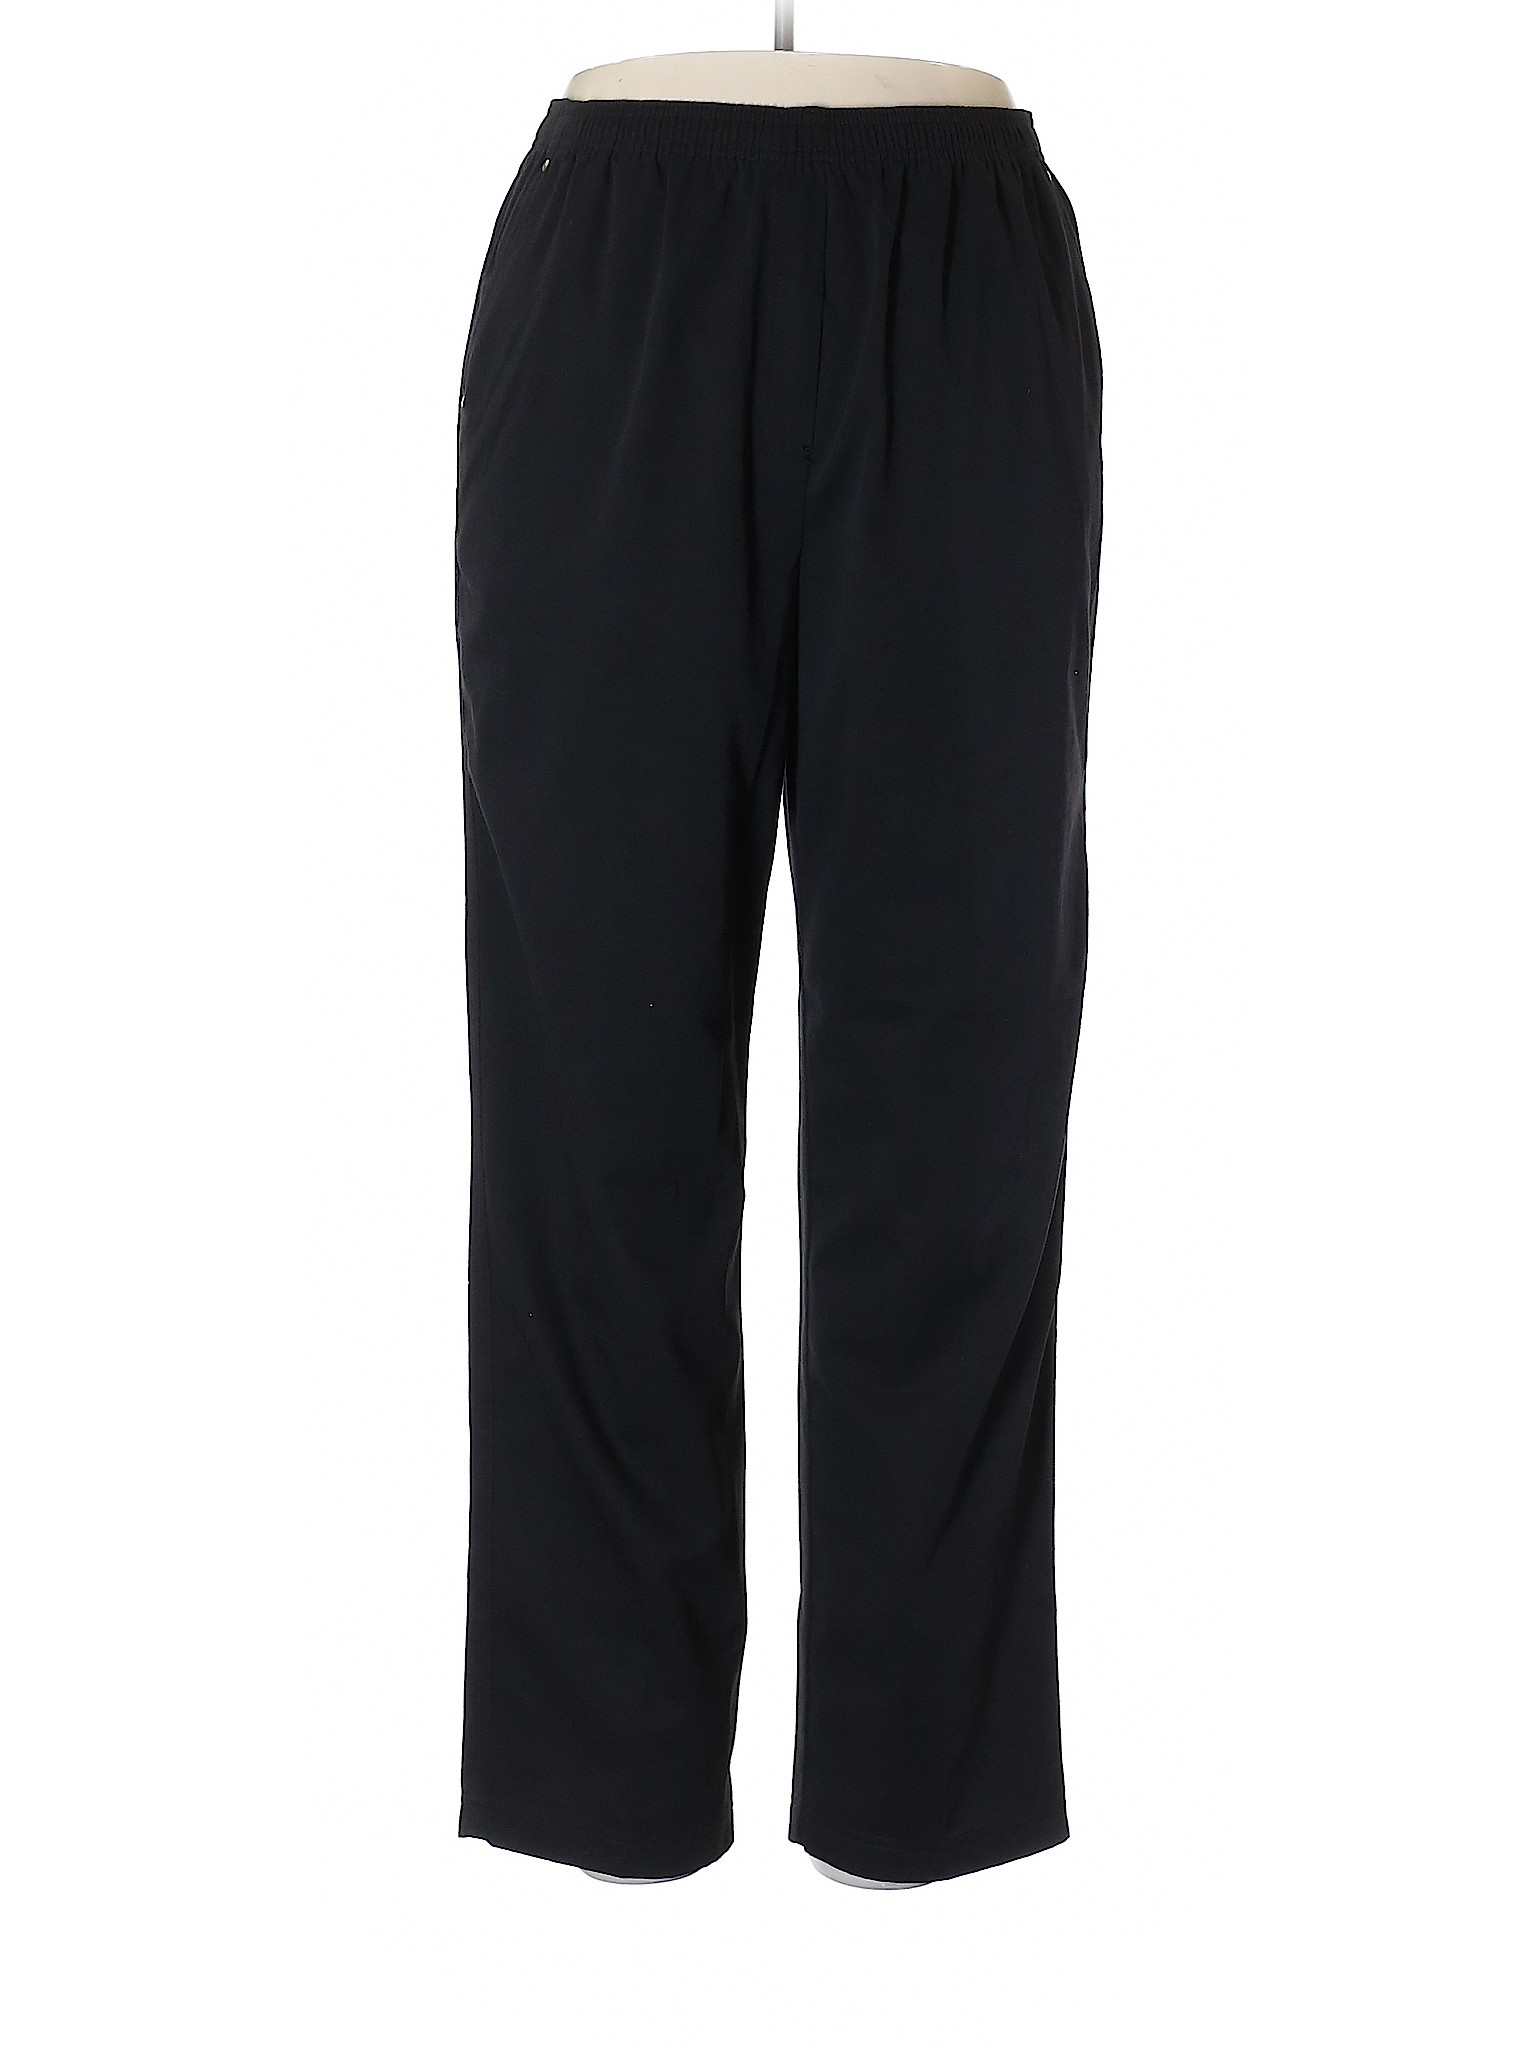 Breckenridge Solid Black Casual Pants Size 14 - 73% off | thredUP